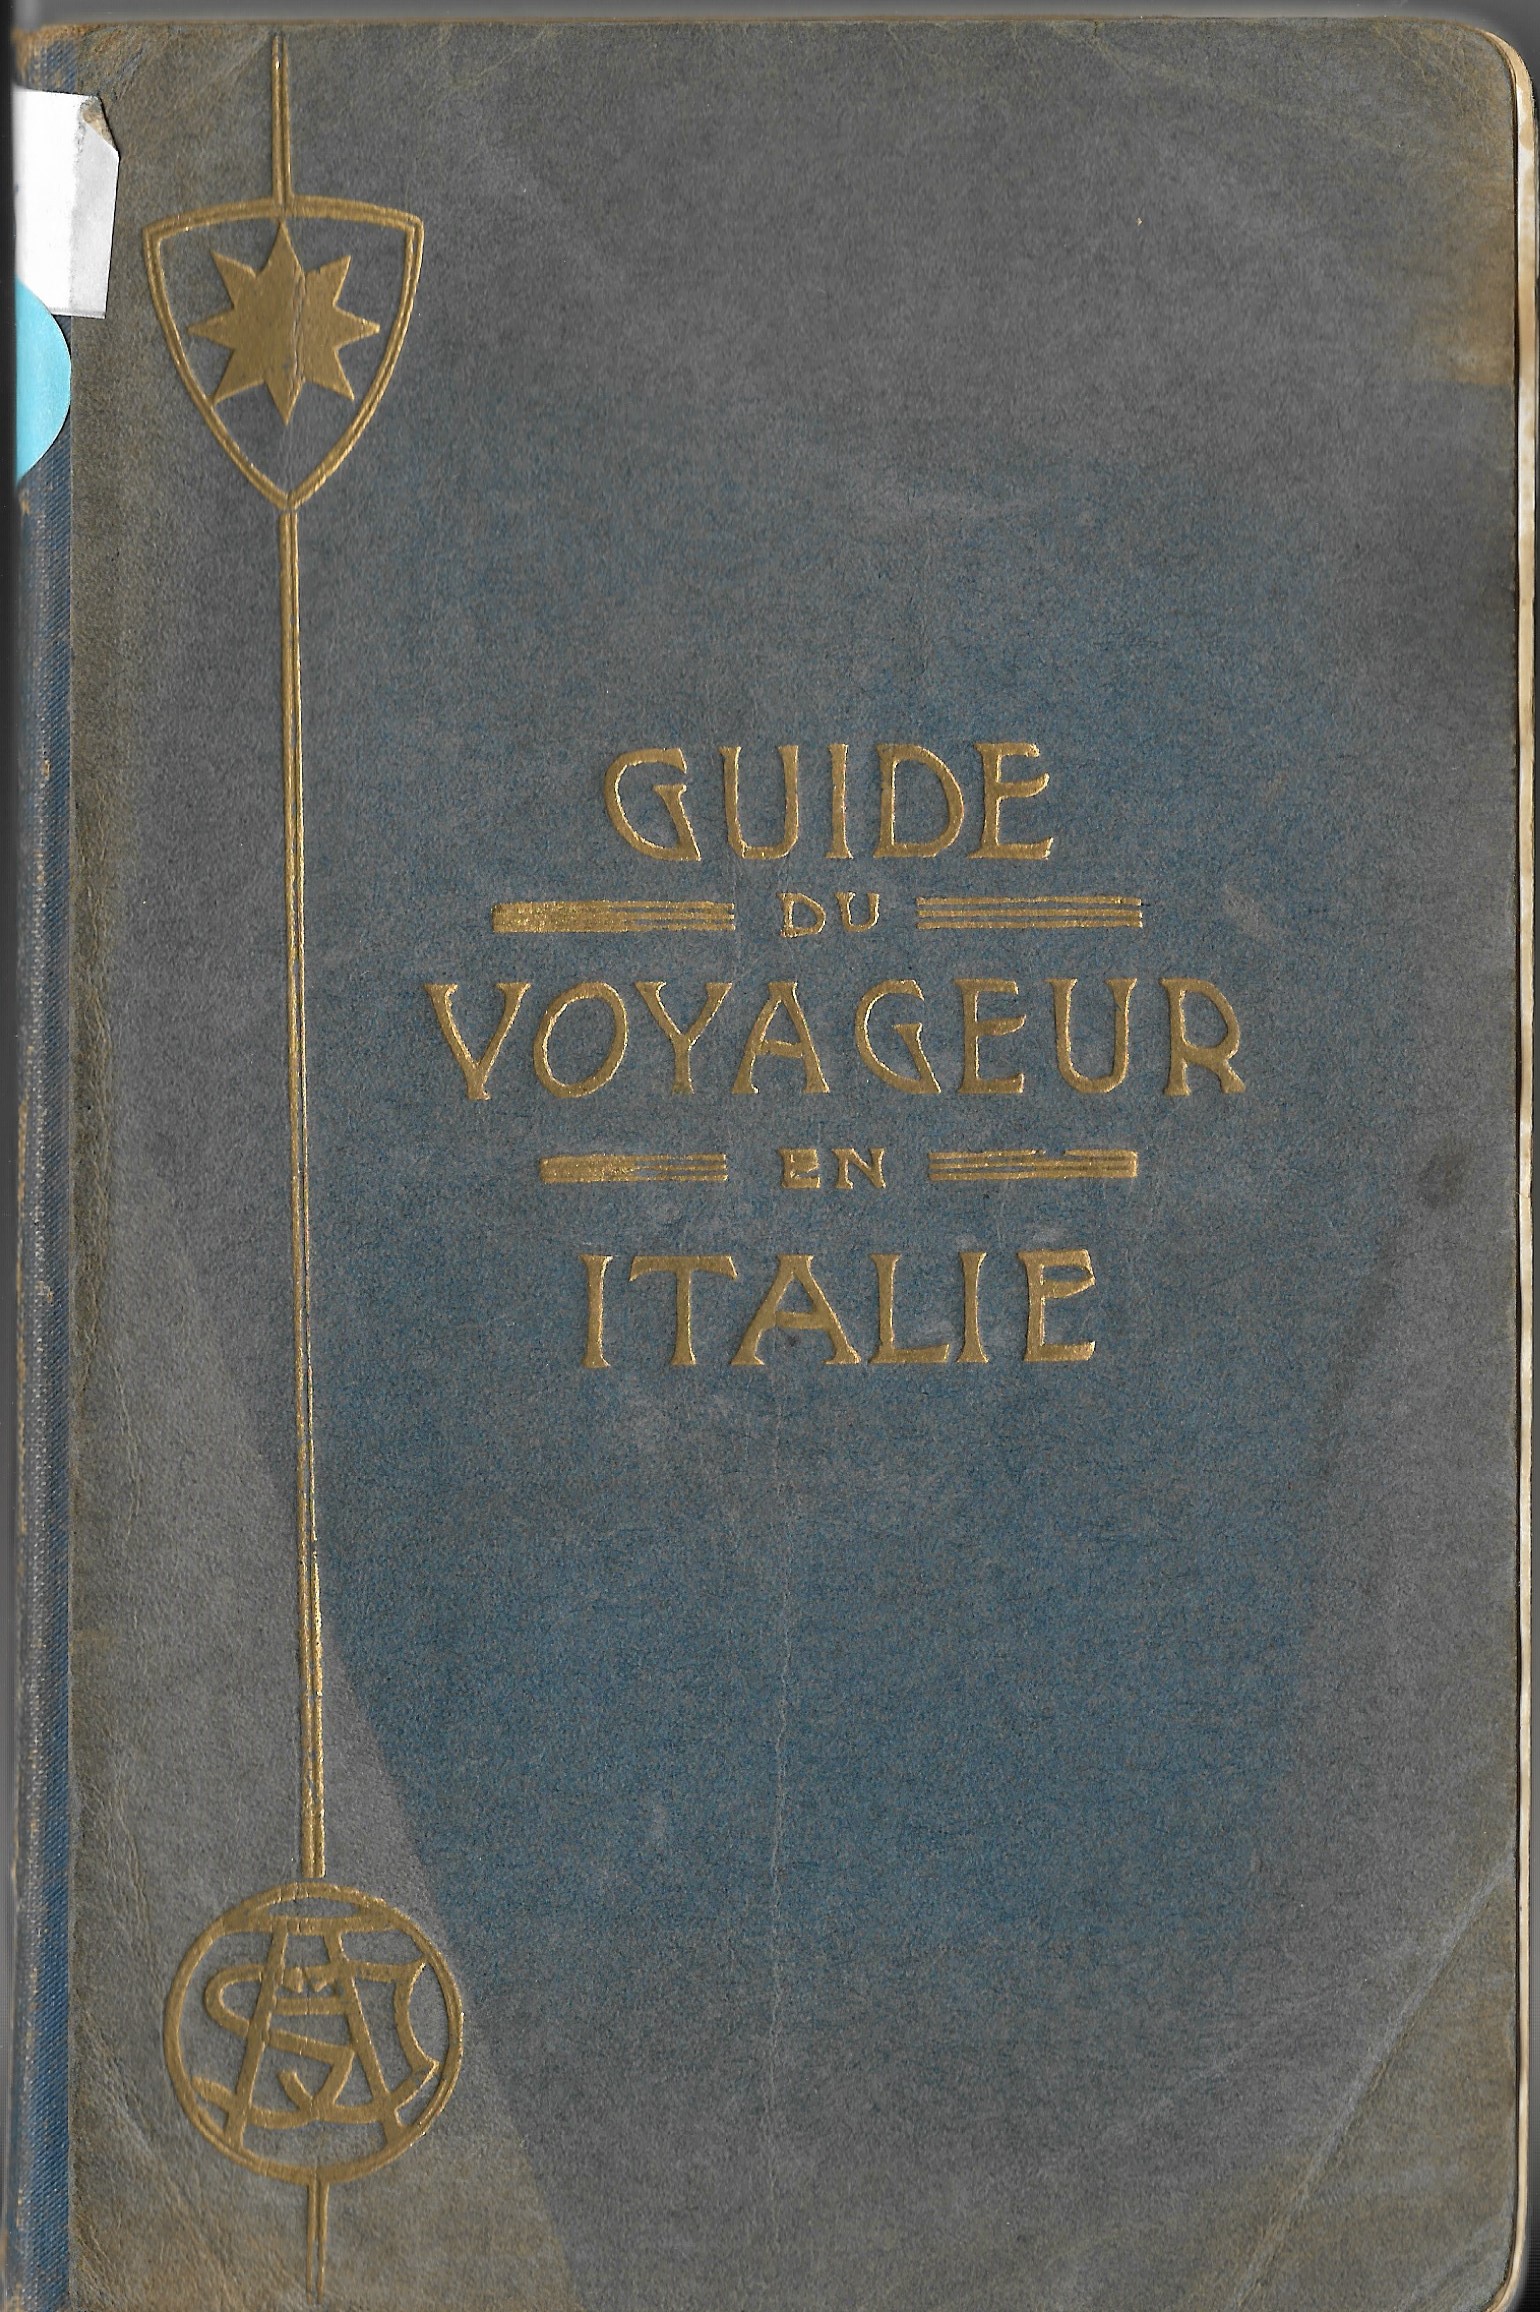 24. « Guide du voyageur en Italie », 1912, 154 p., 3 €